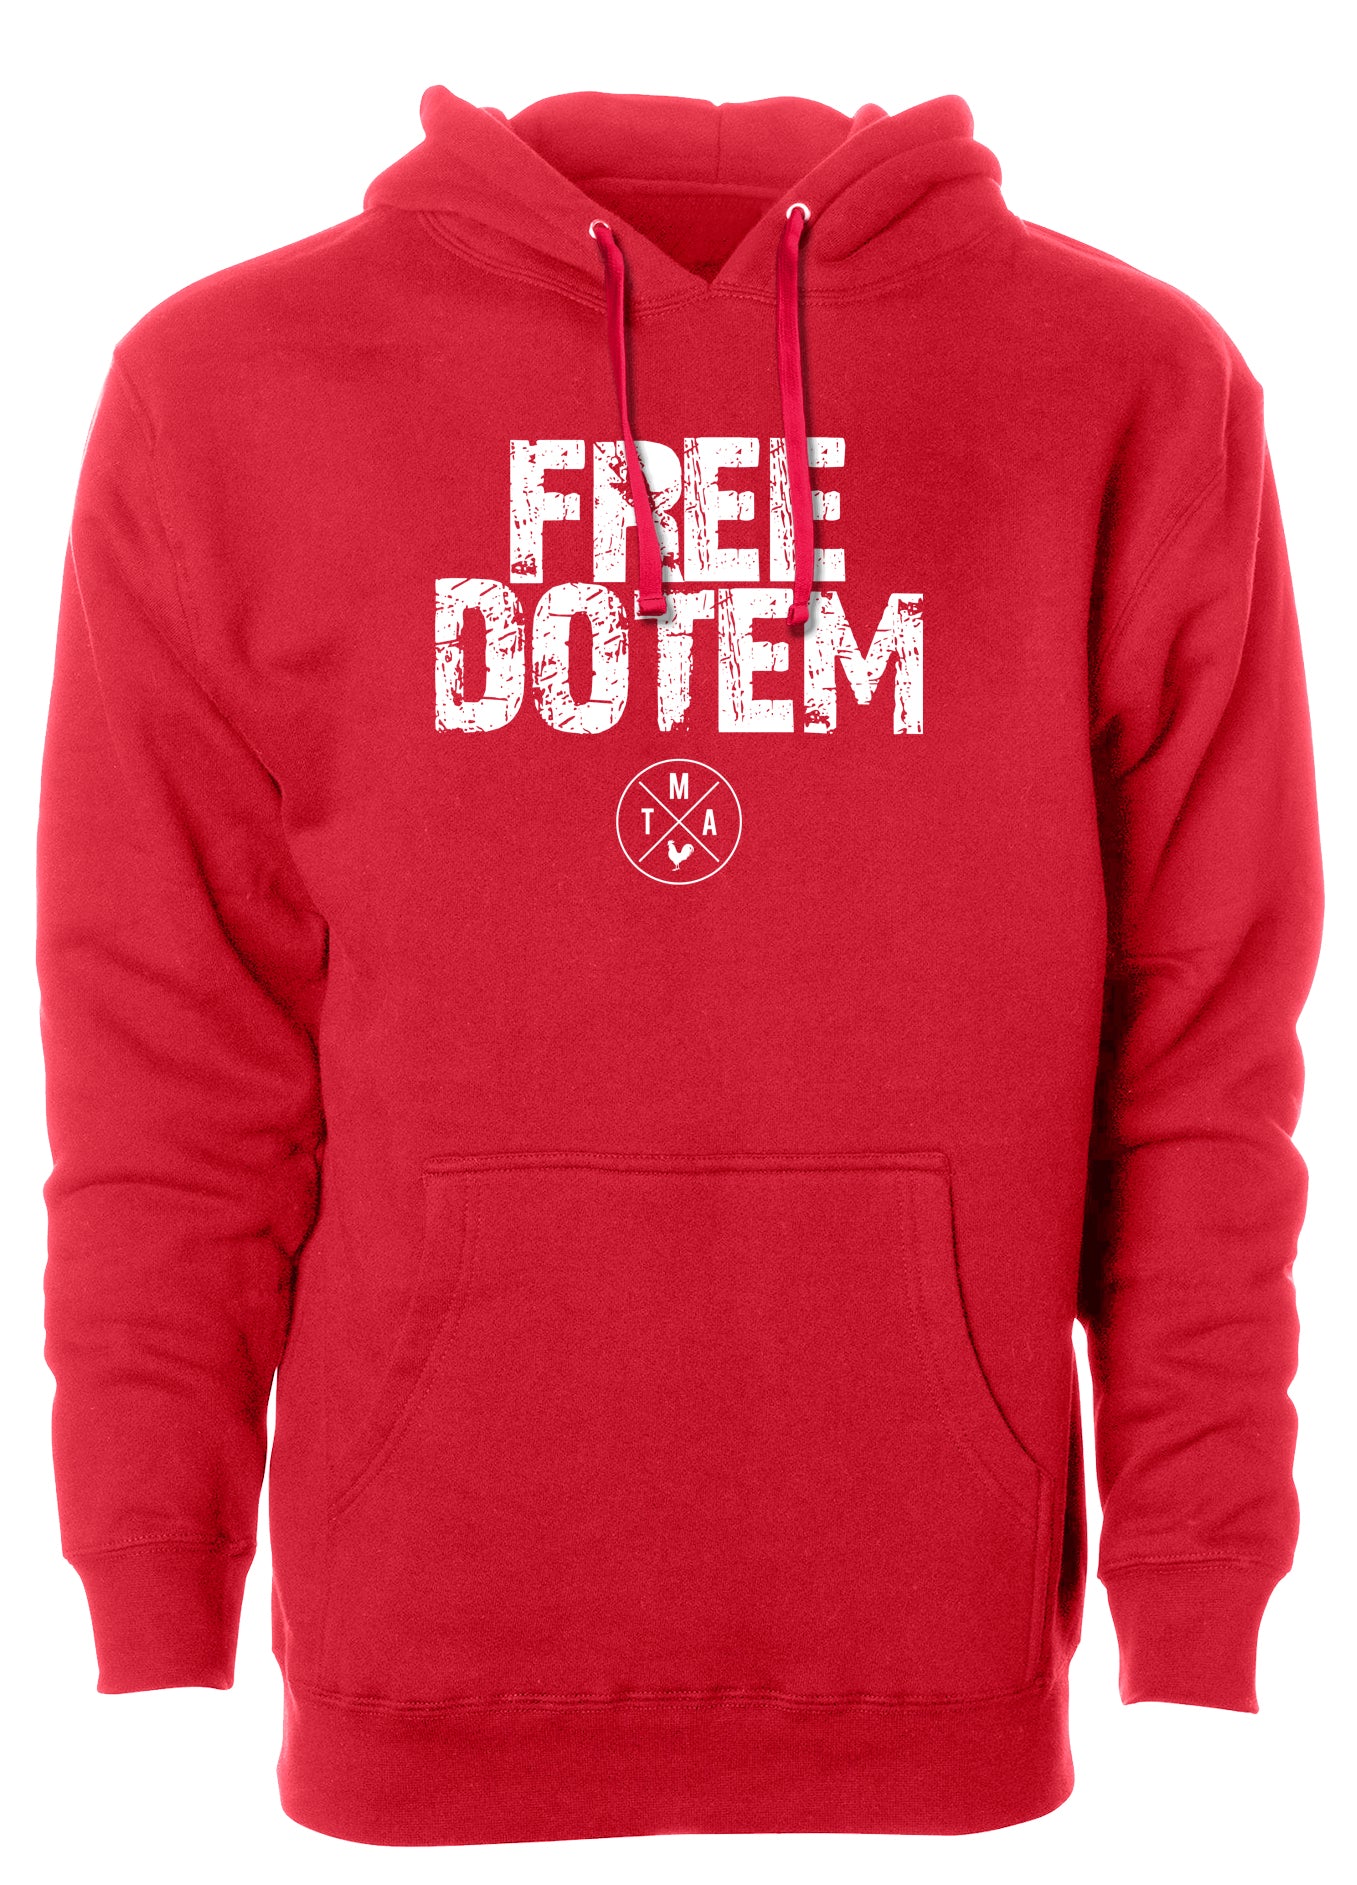 free dotem deke dennis st louis cardinals caller dan apparel clothing hoodie sweatshirt cardinal red